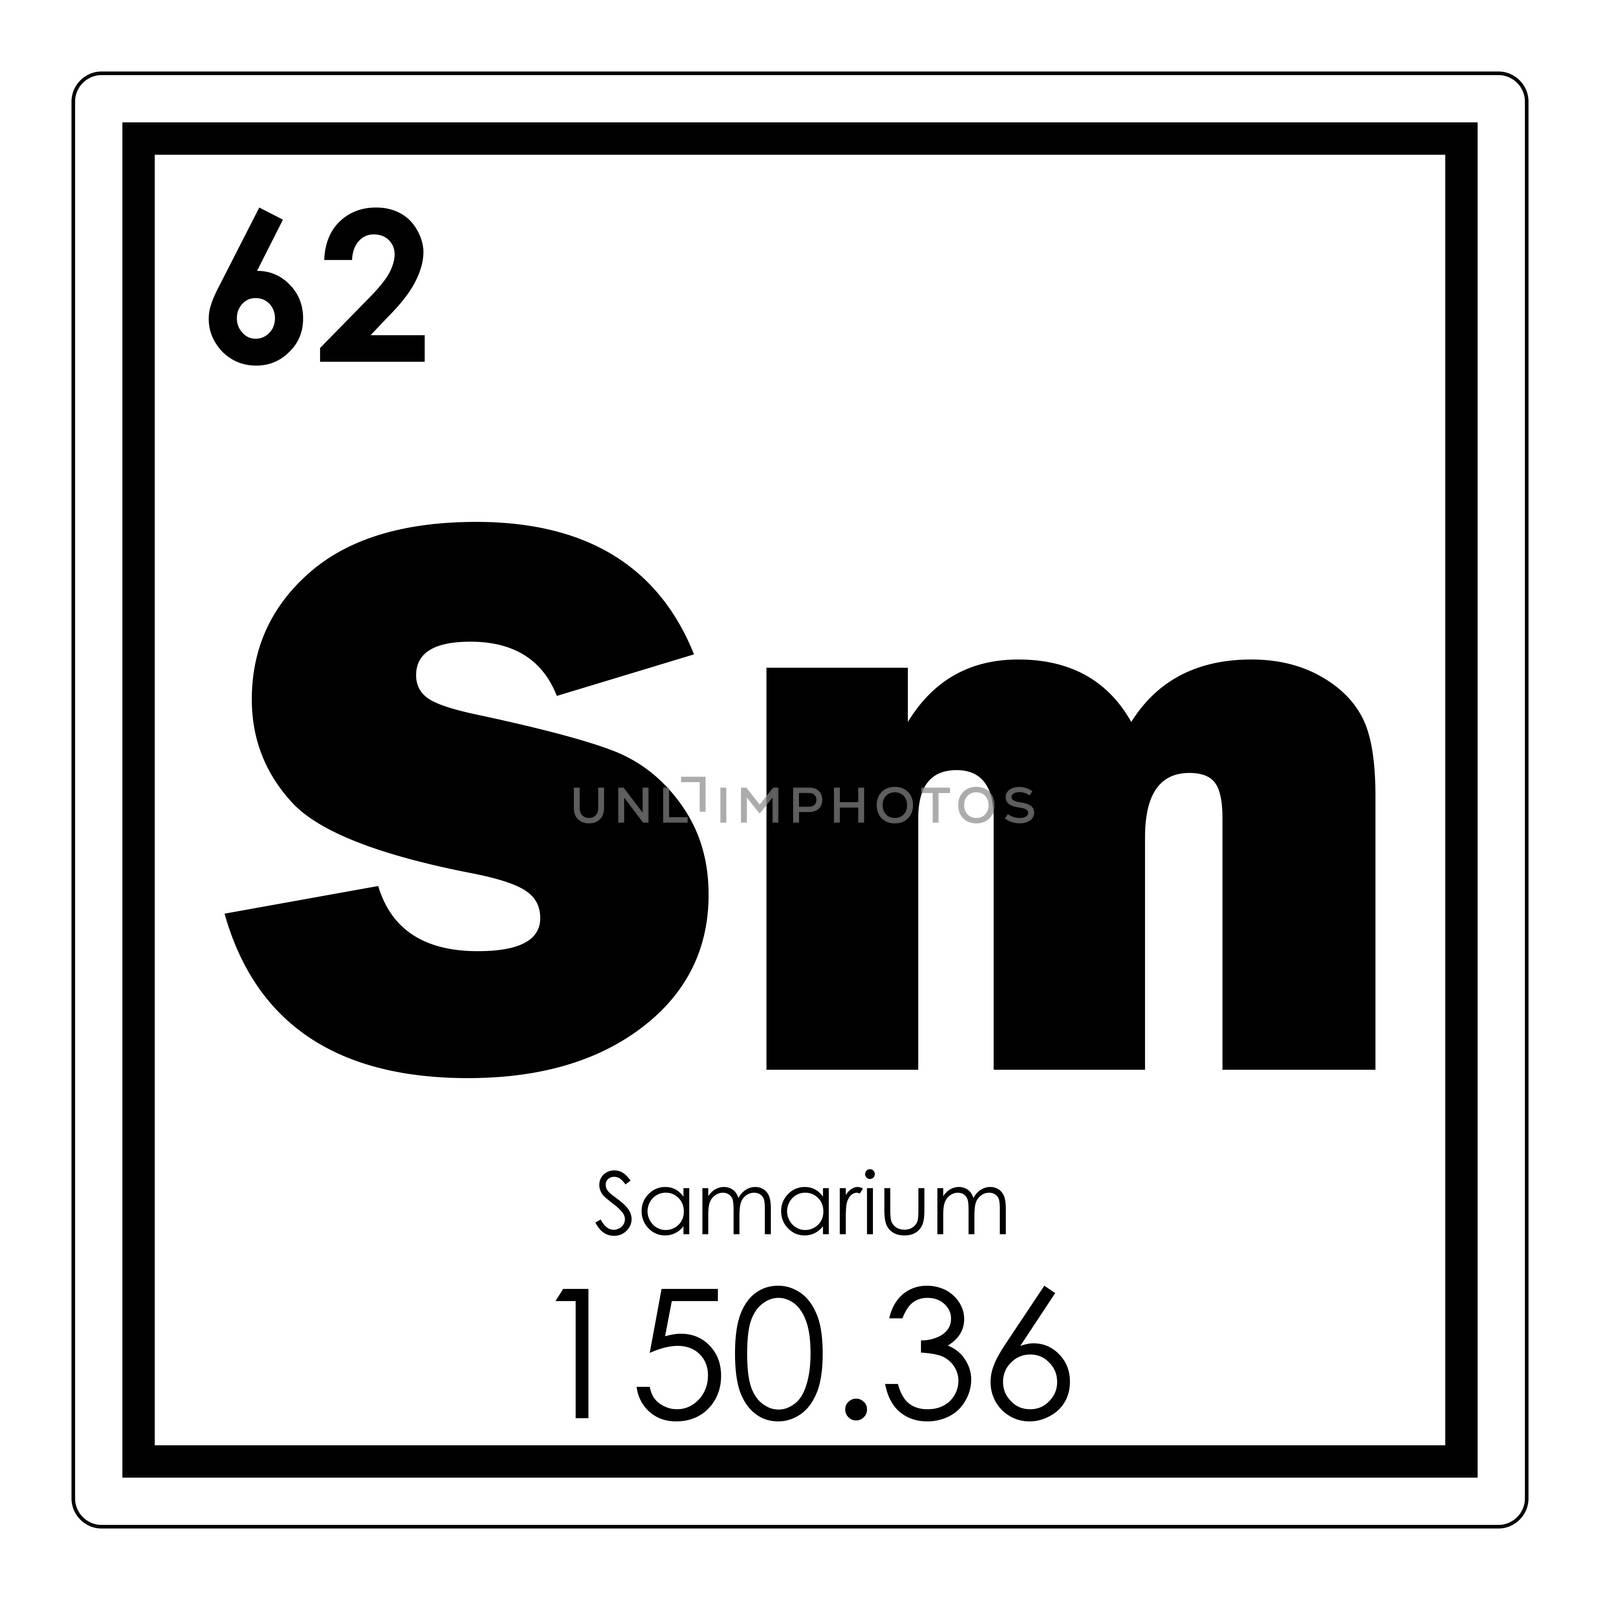 Samarium chemical element by tony4urban